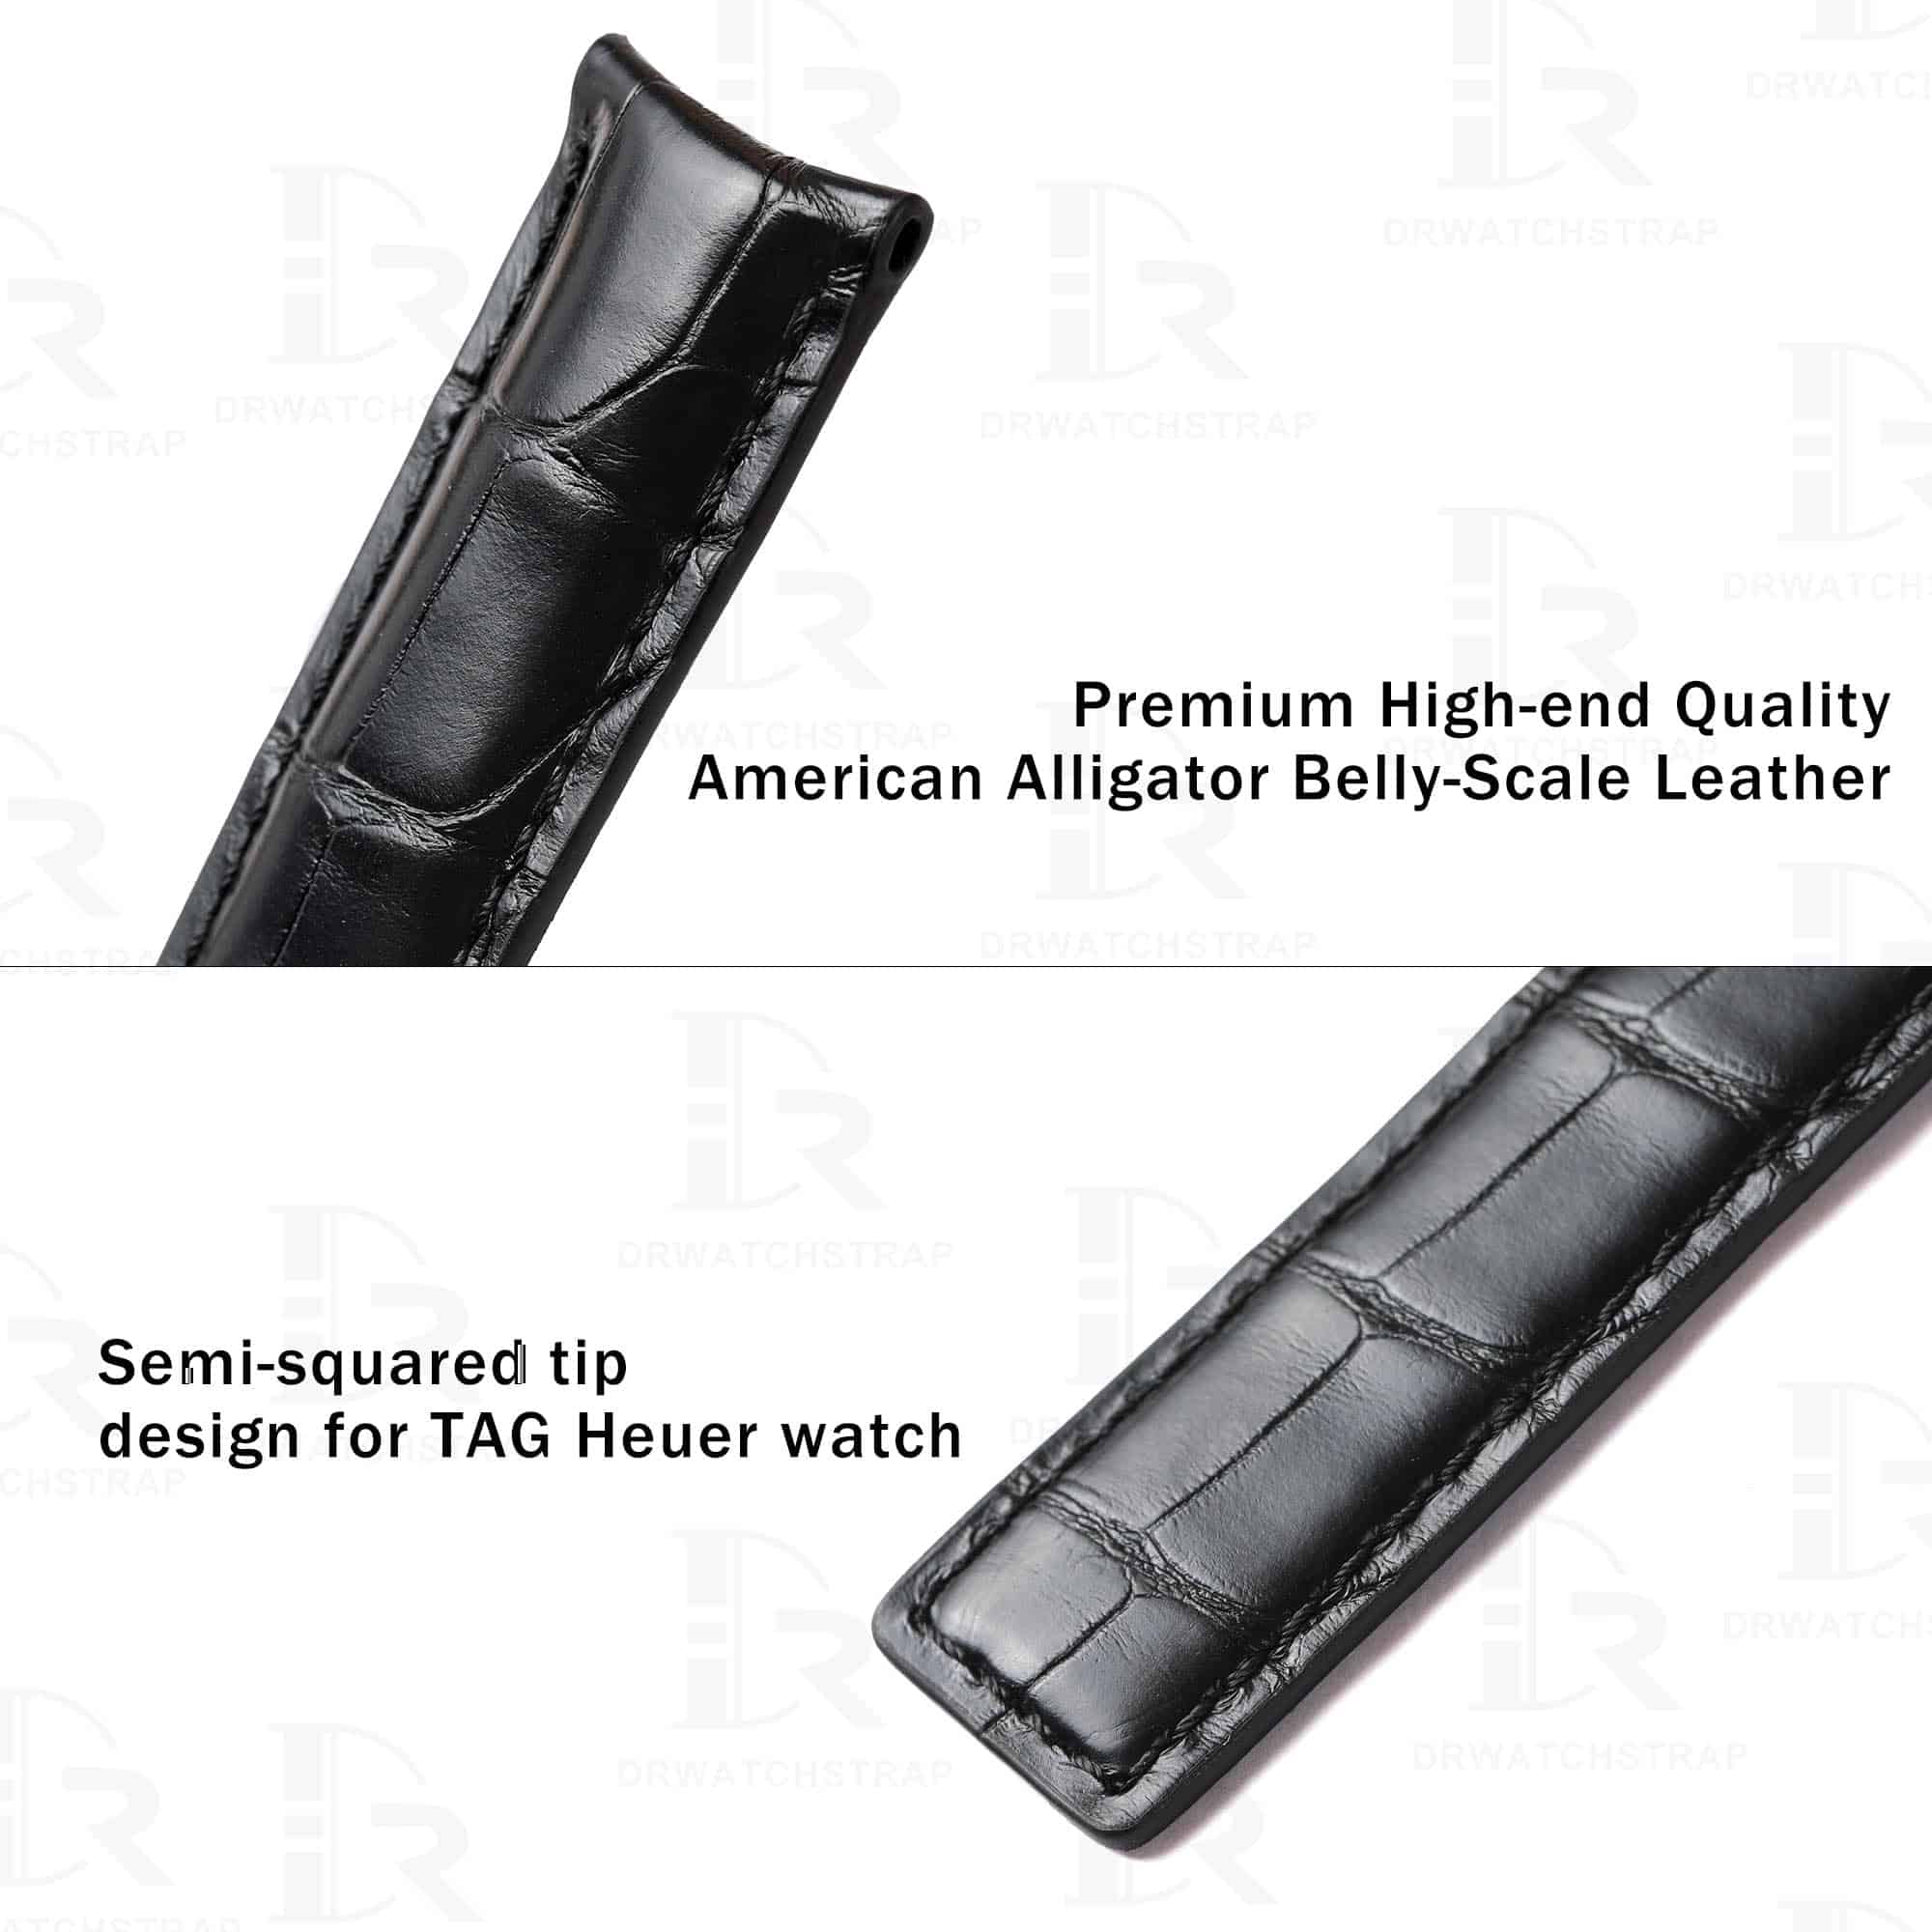 Genuine alligator leather and Semi-squared tip design